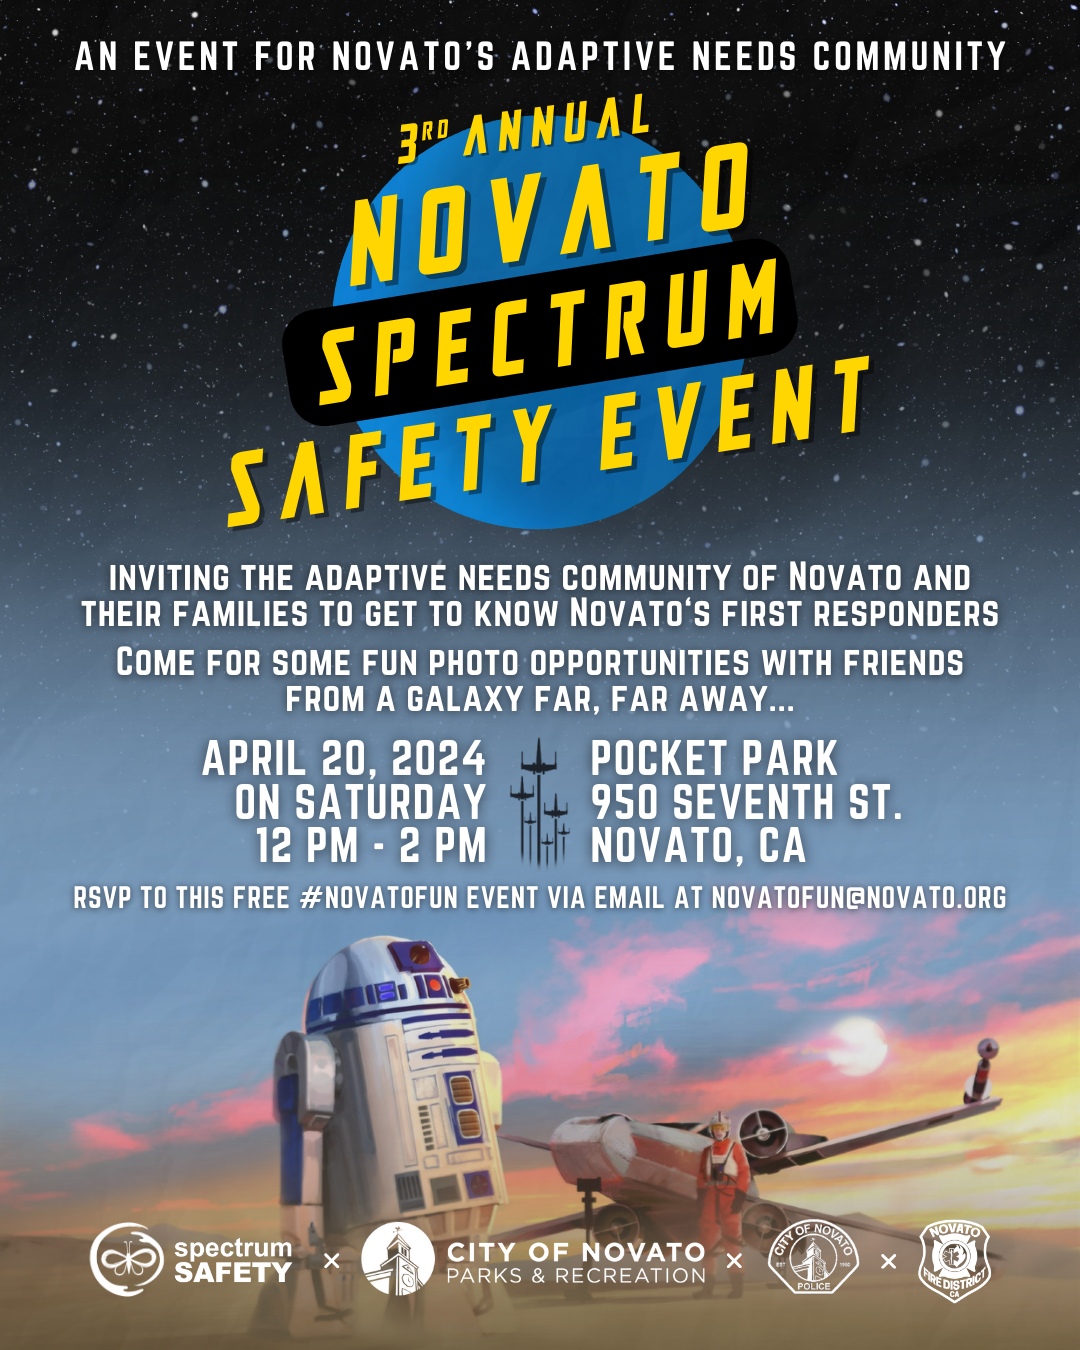 Novato Spectrum Safety Event: an event for Novato's Adaptive Needs Community